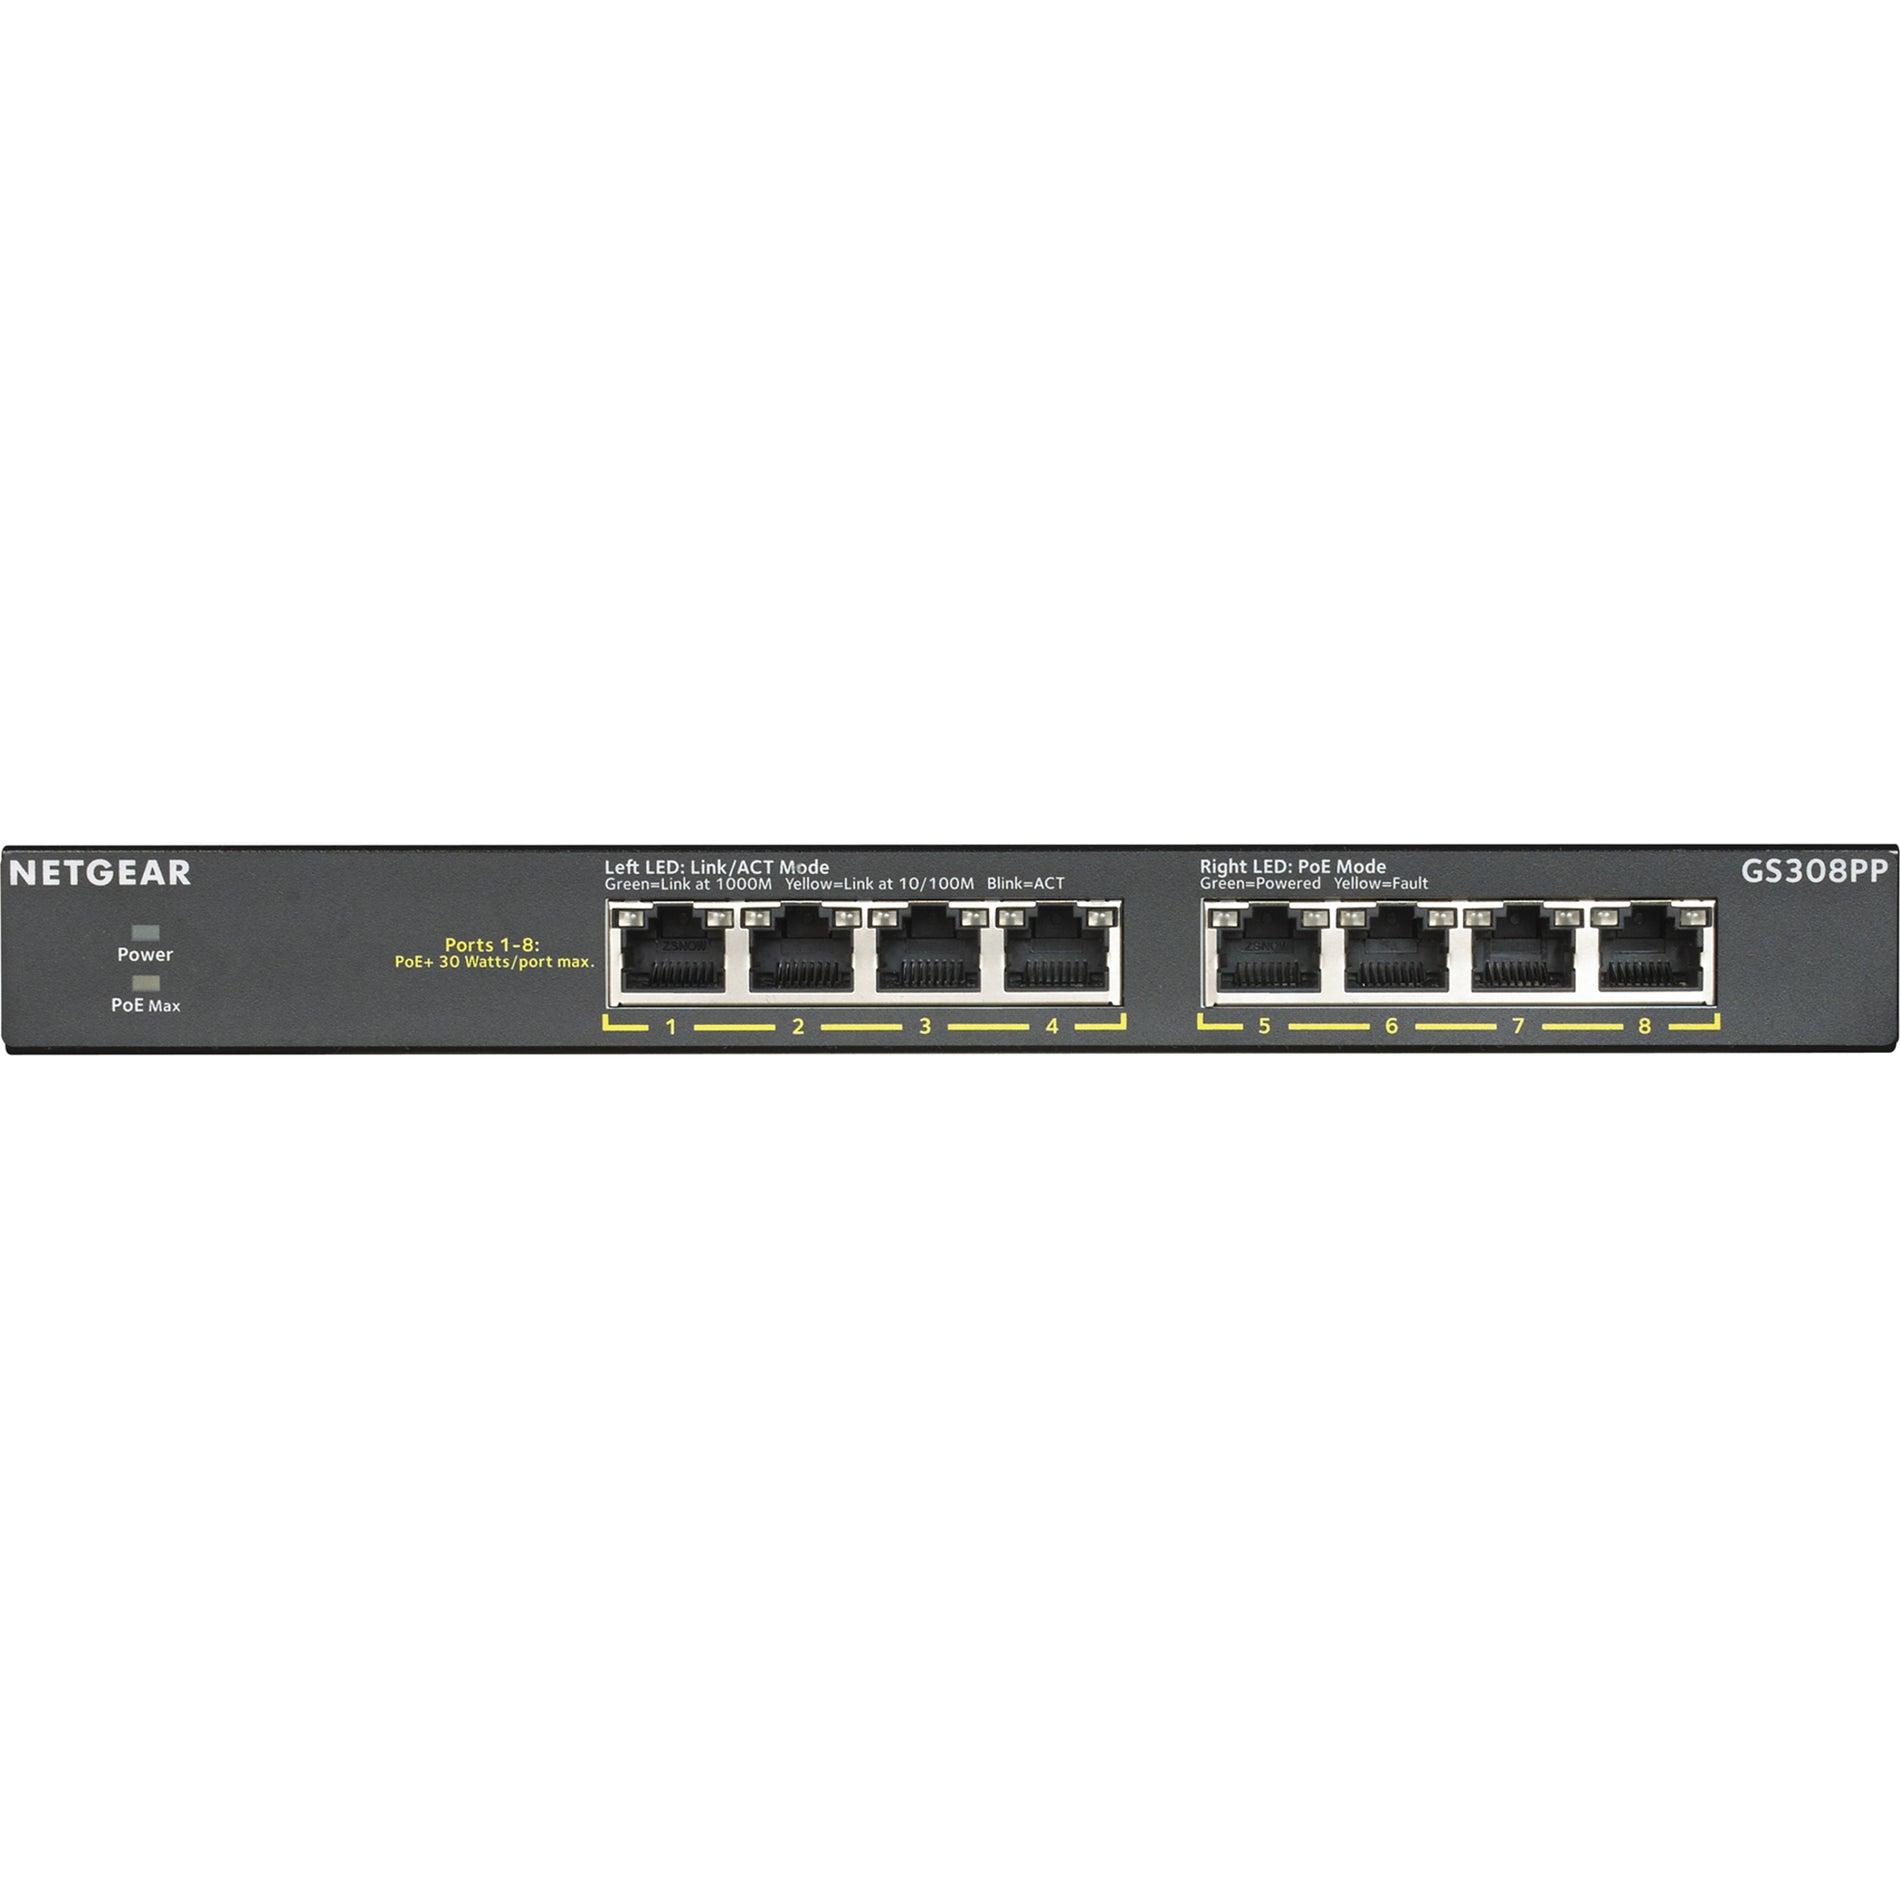 Netgear GS308PP-100NAS GS308PP  Switch Ethernet 8 Porte Gigabit Ethernet PoE+ Garanzia a Vita di 3 Anni